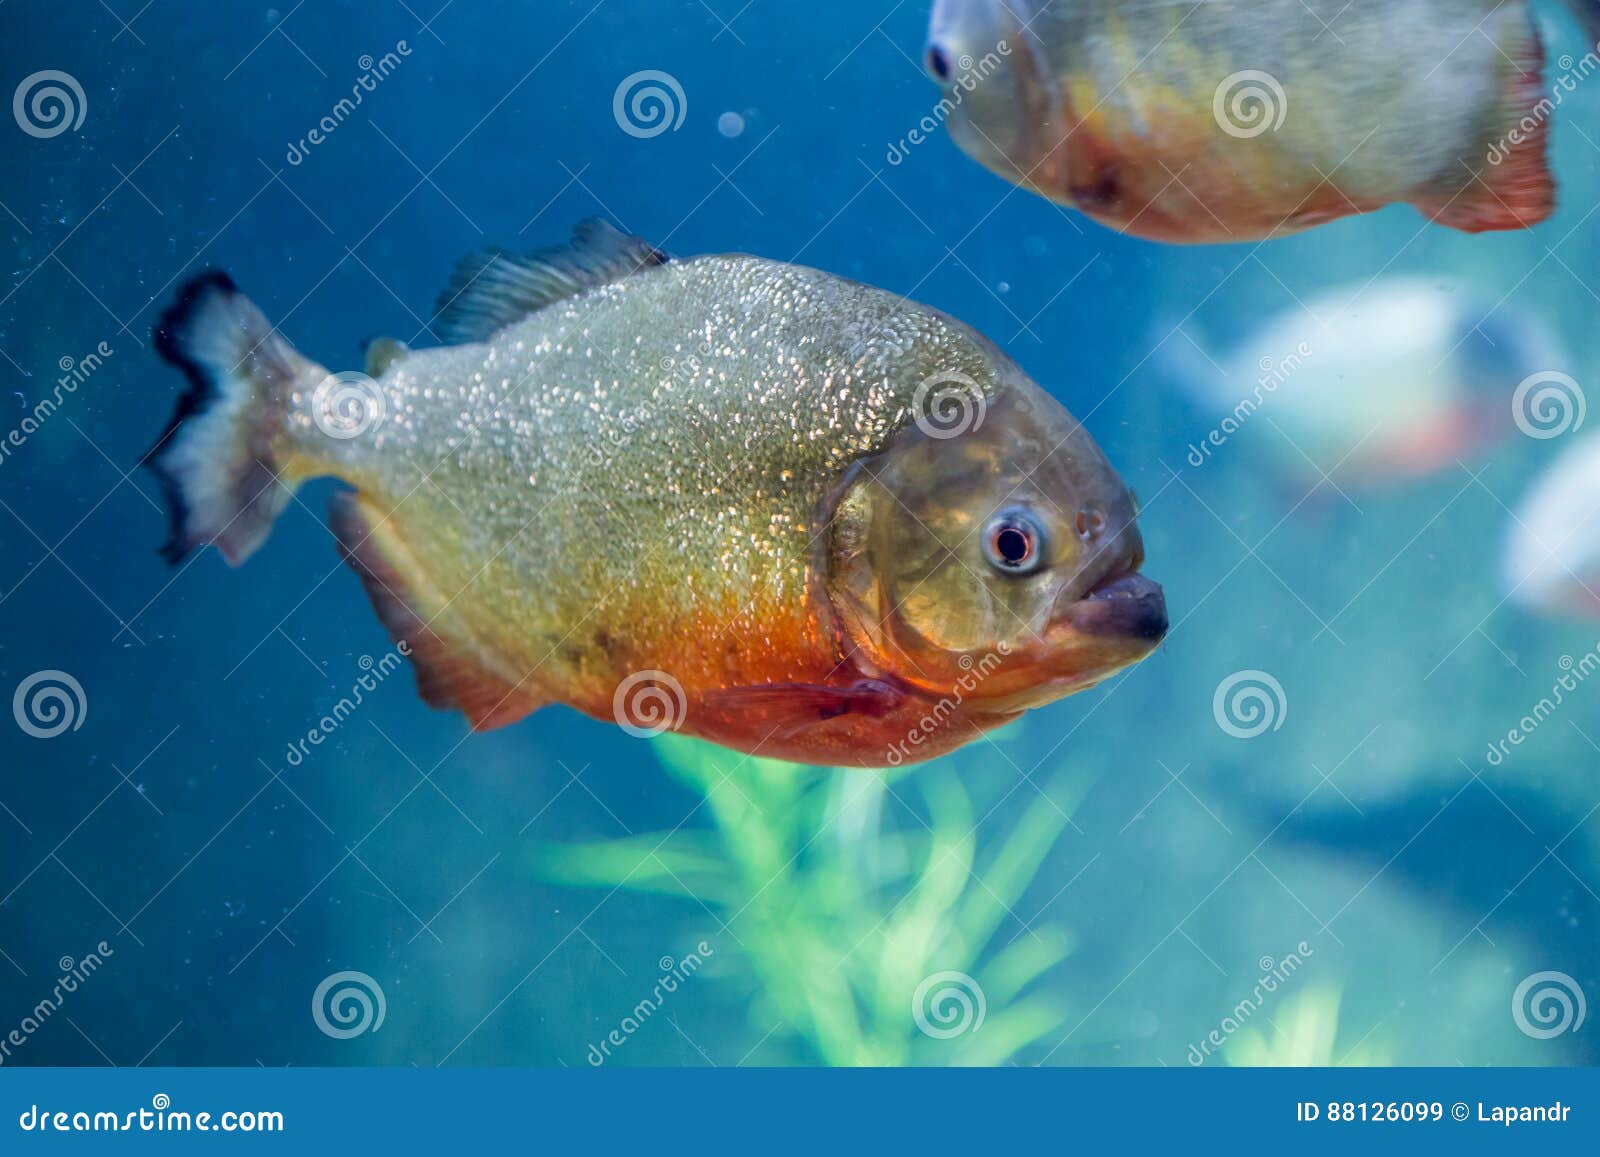 piranha in the aquarium. pygocentrus nattereri. serrasalminae. characidae